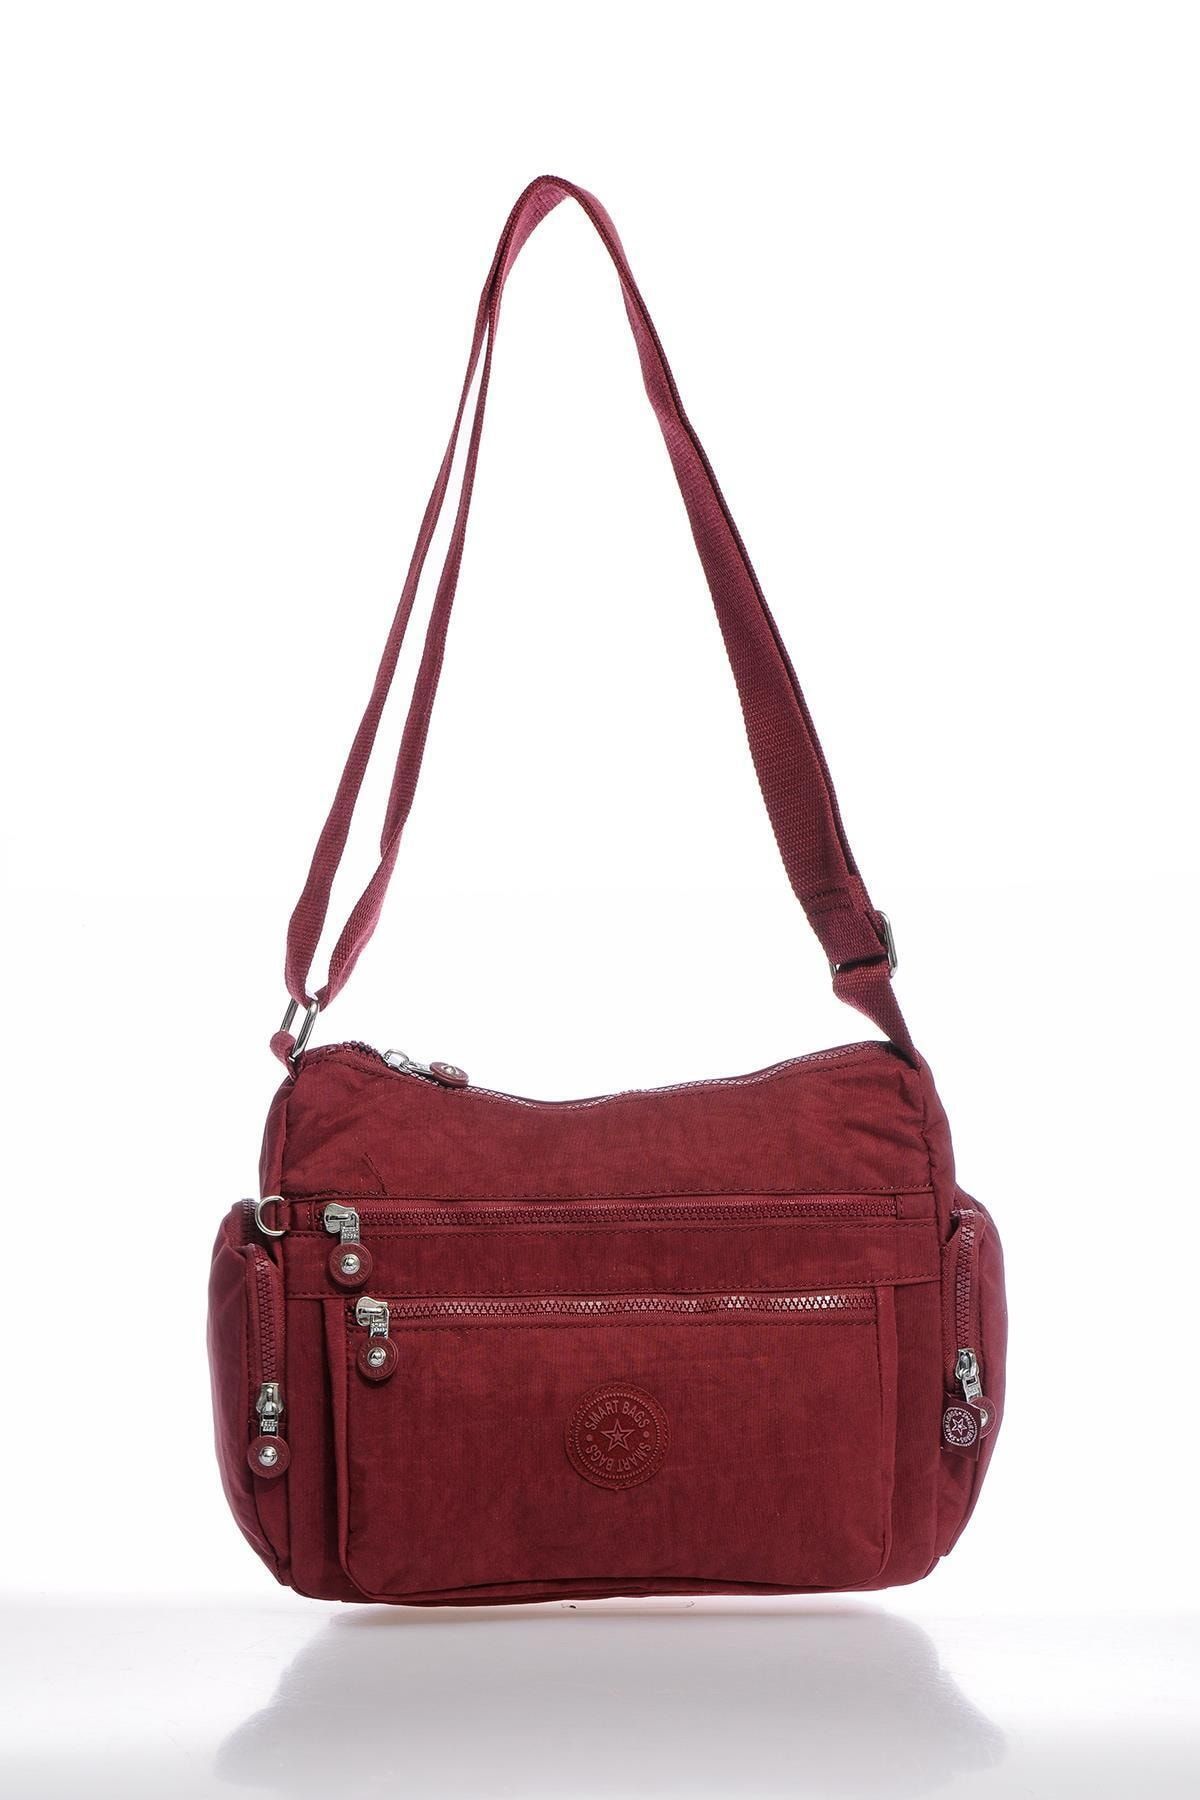 Smart Bags Smbky1115-0021 Bordo Kadın Çapraz Çanta